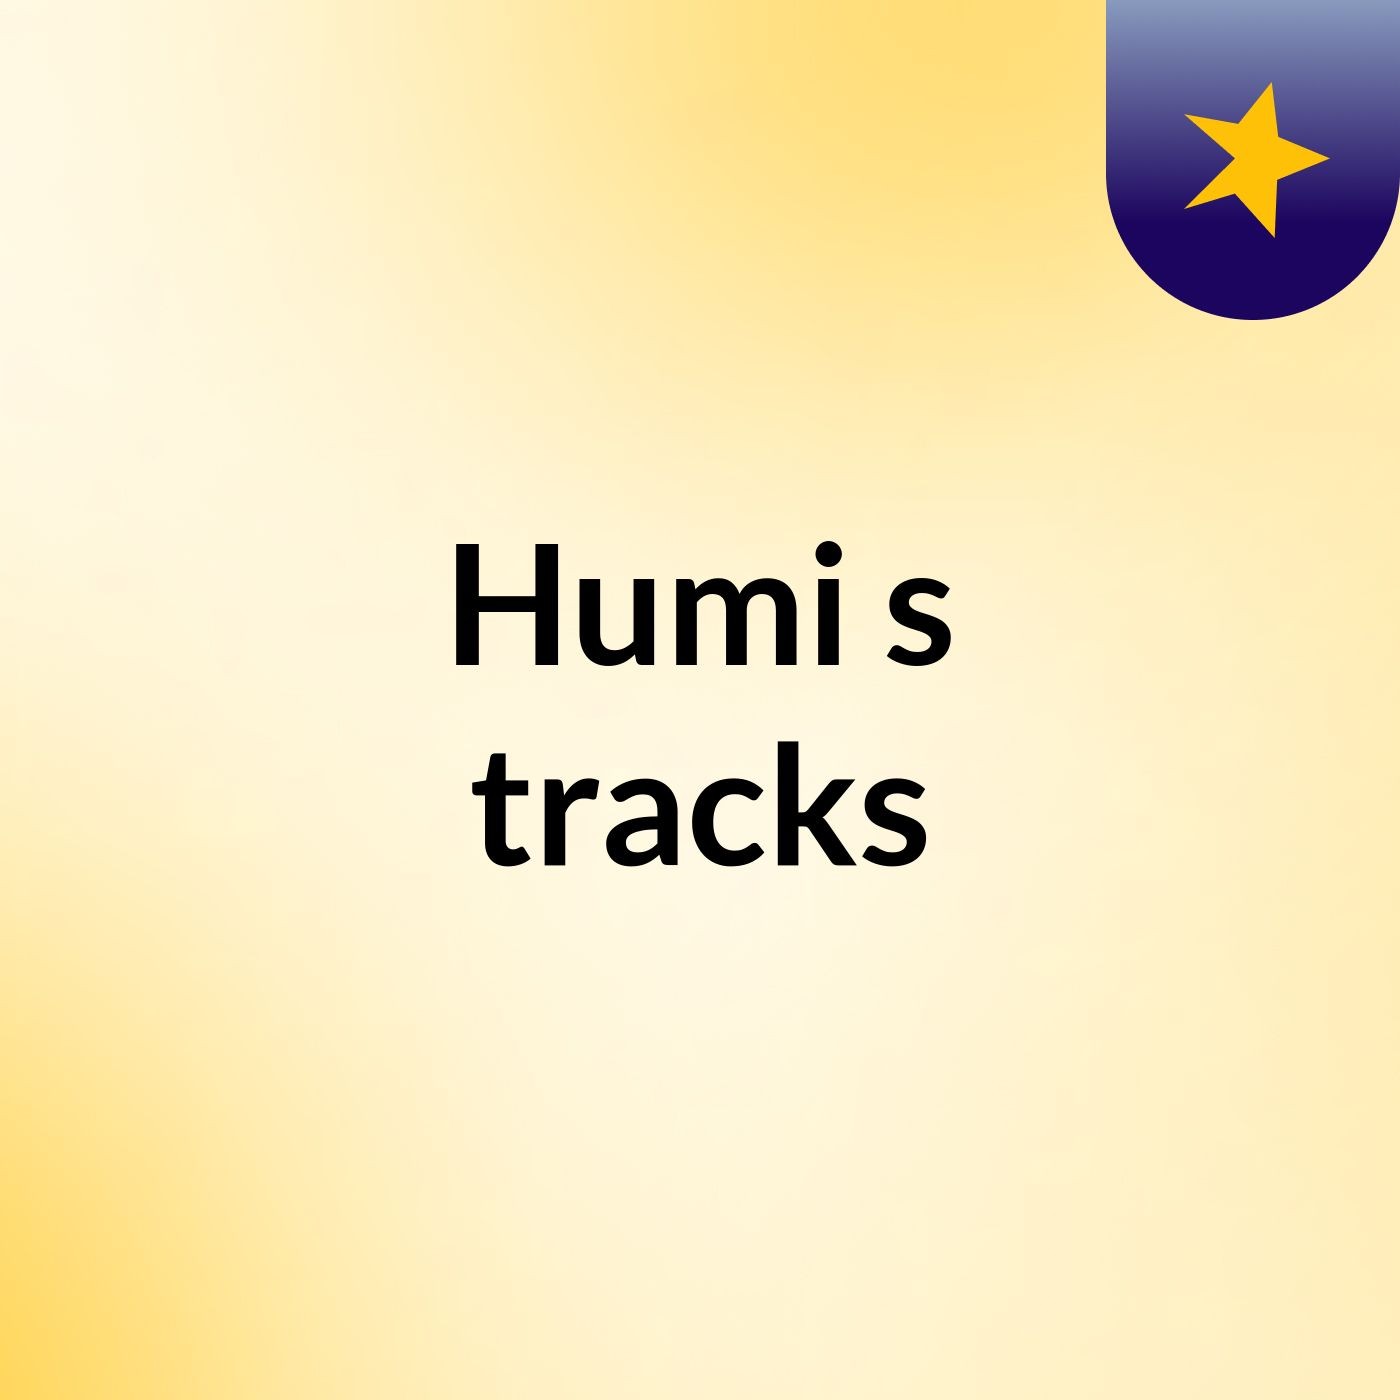 Humi's tracks